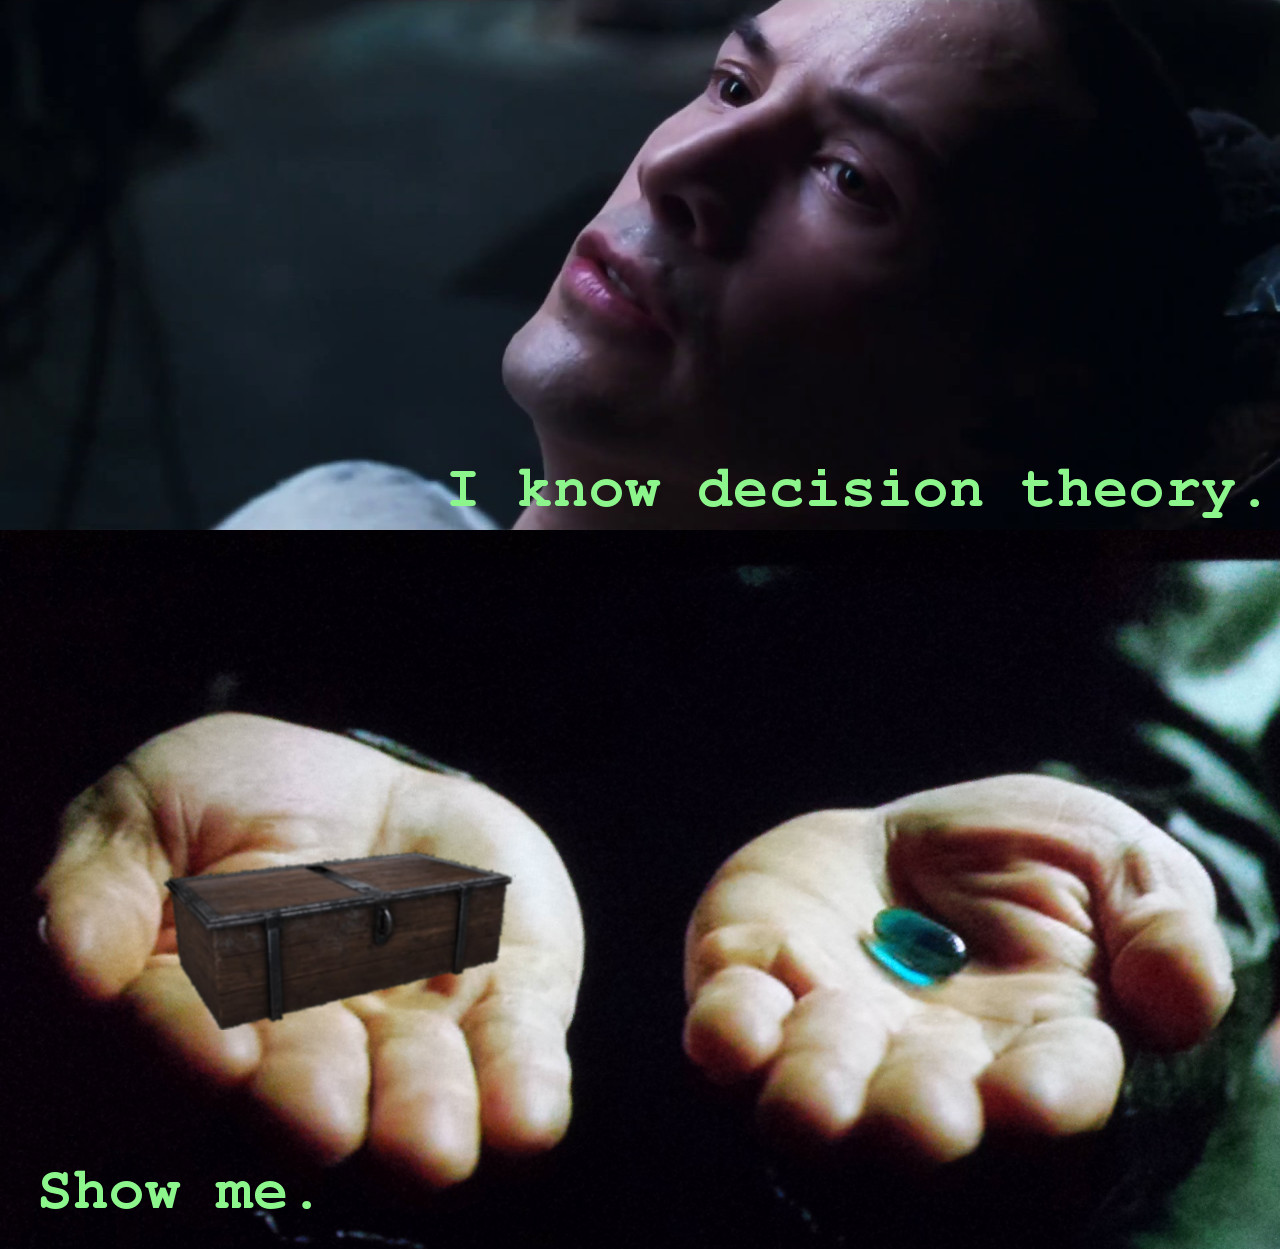 “I know decision theory.” “Show me.”